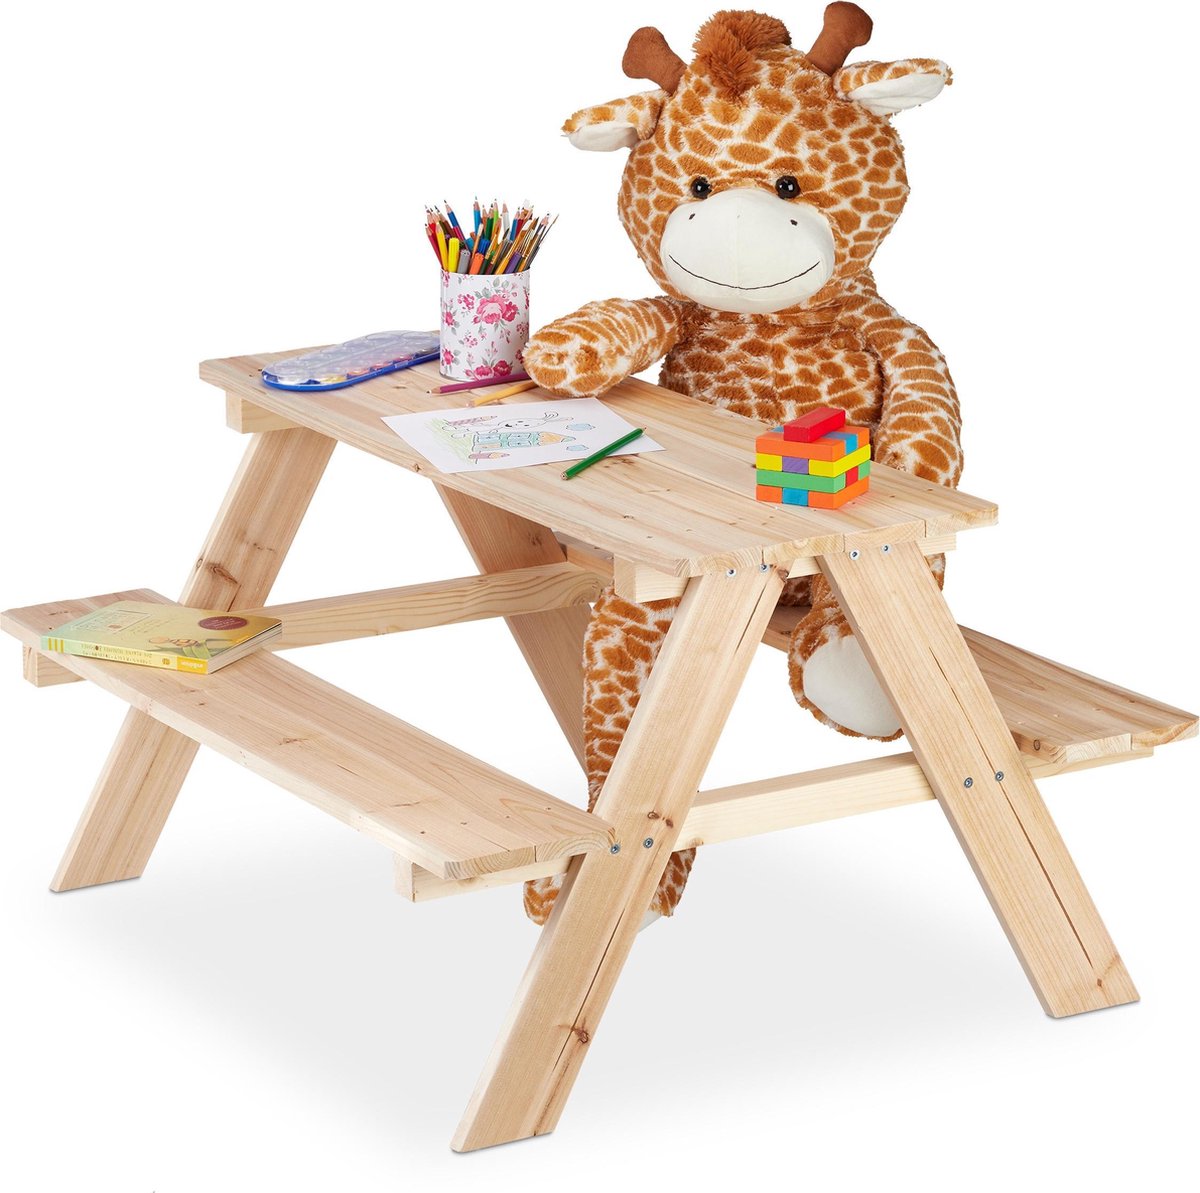 Relaxdays kinderpicknicktafel hout - tuintafel kinderen - speeltafel - kindertafel tuin